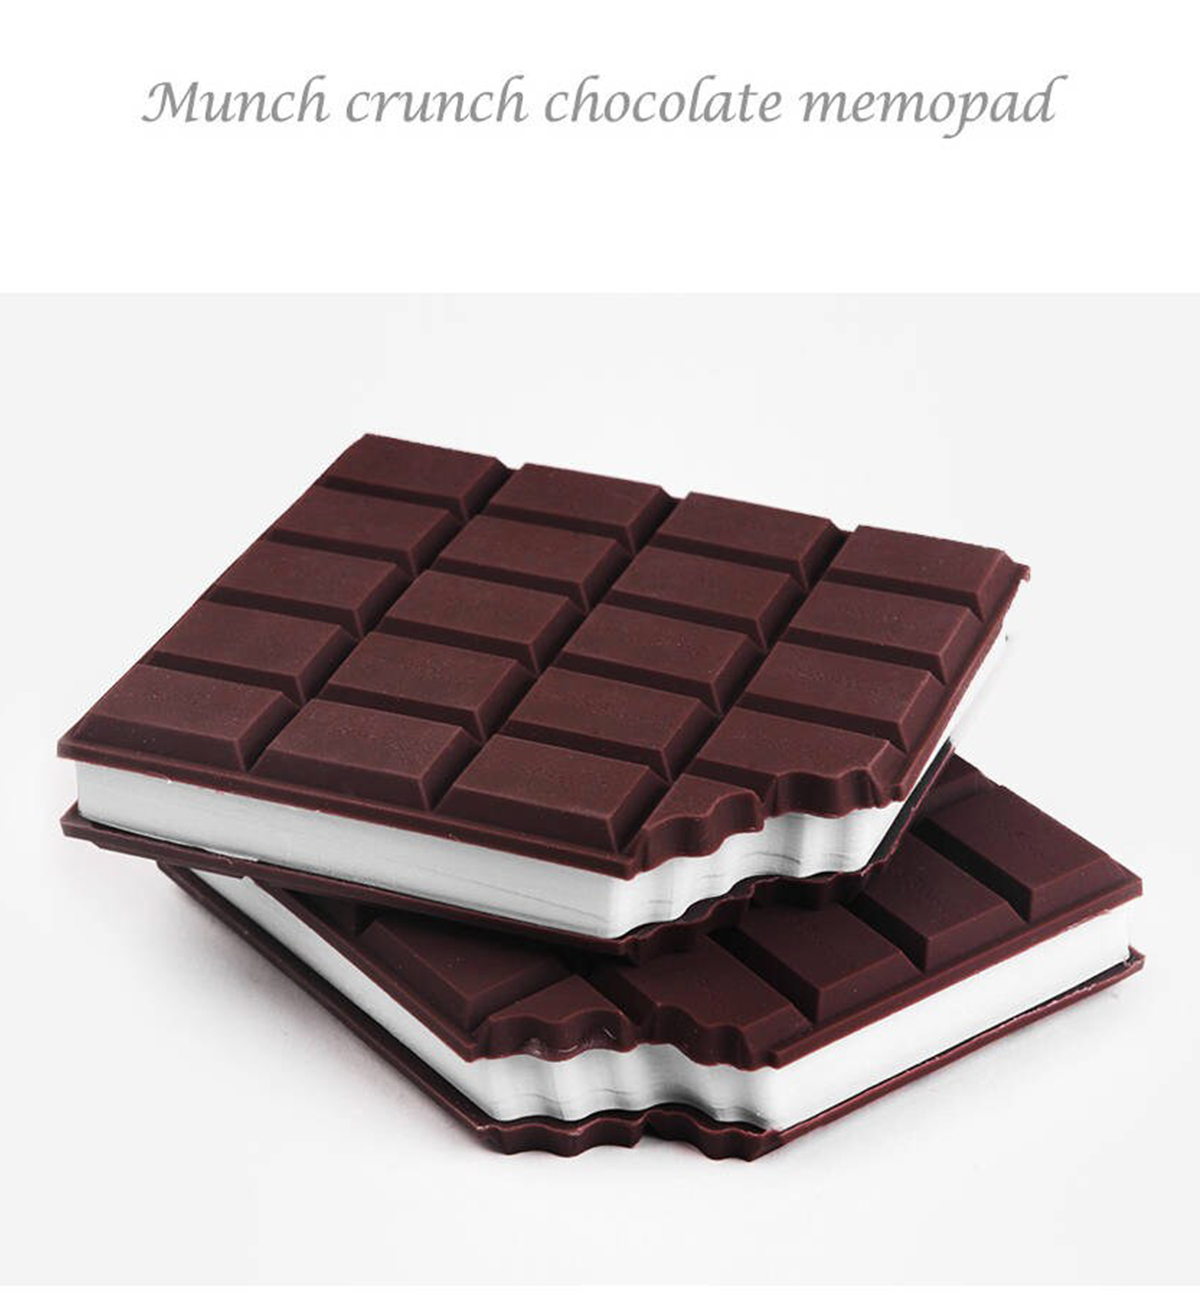 Munch Crunch Chocolate Memopad